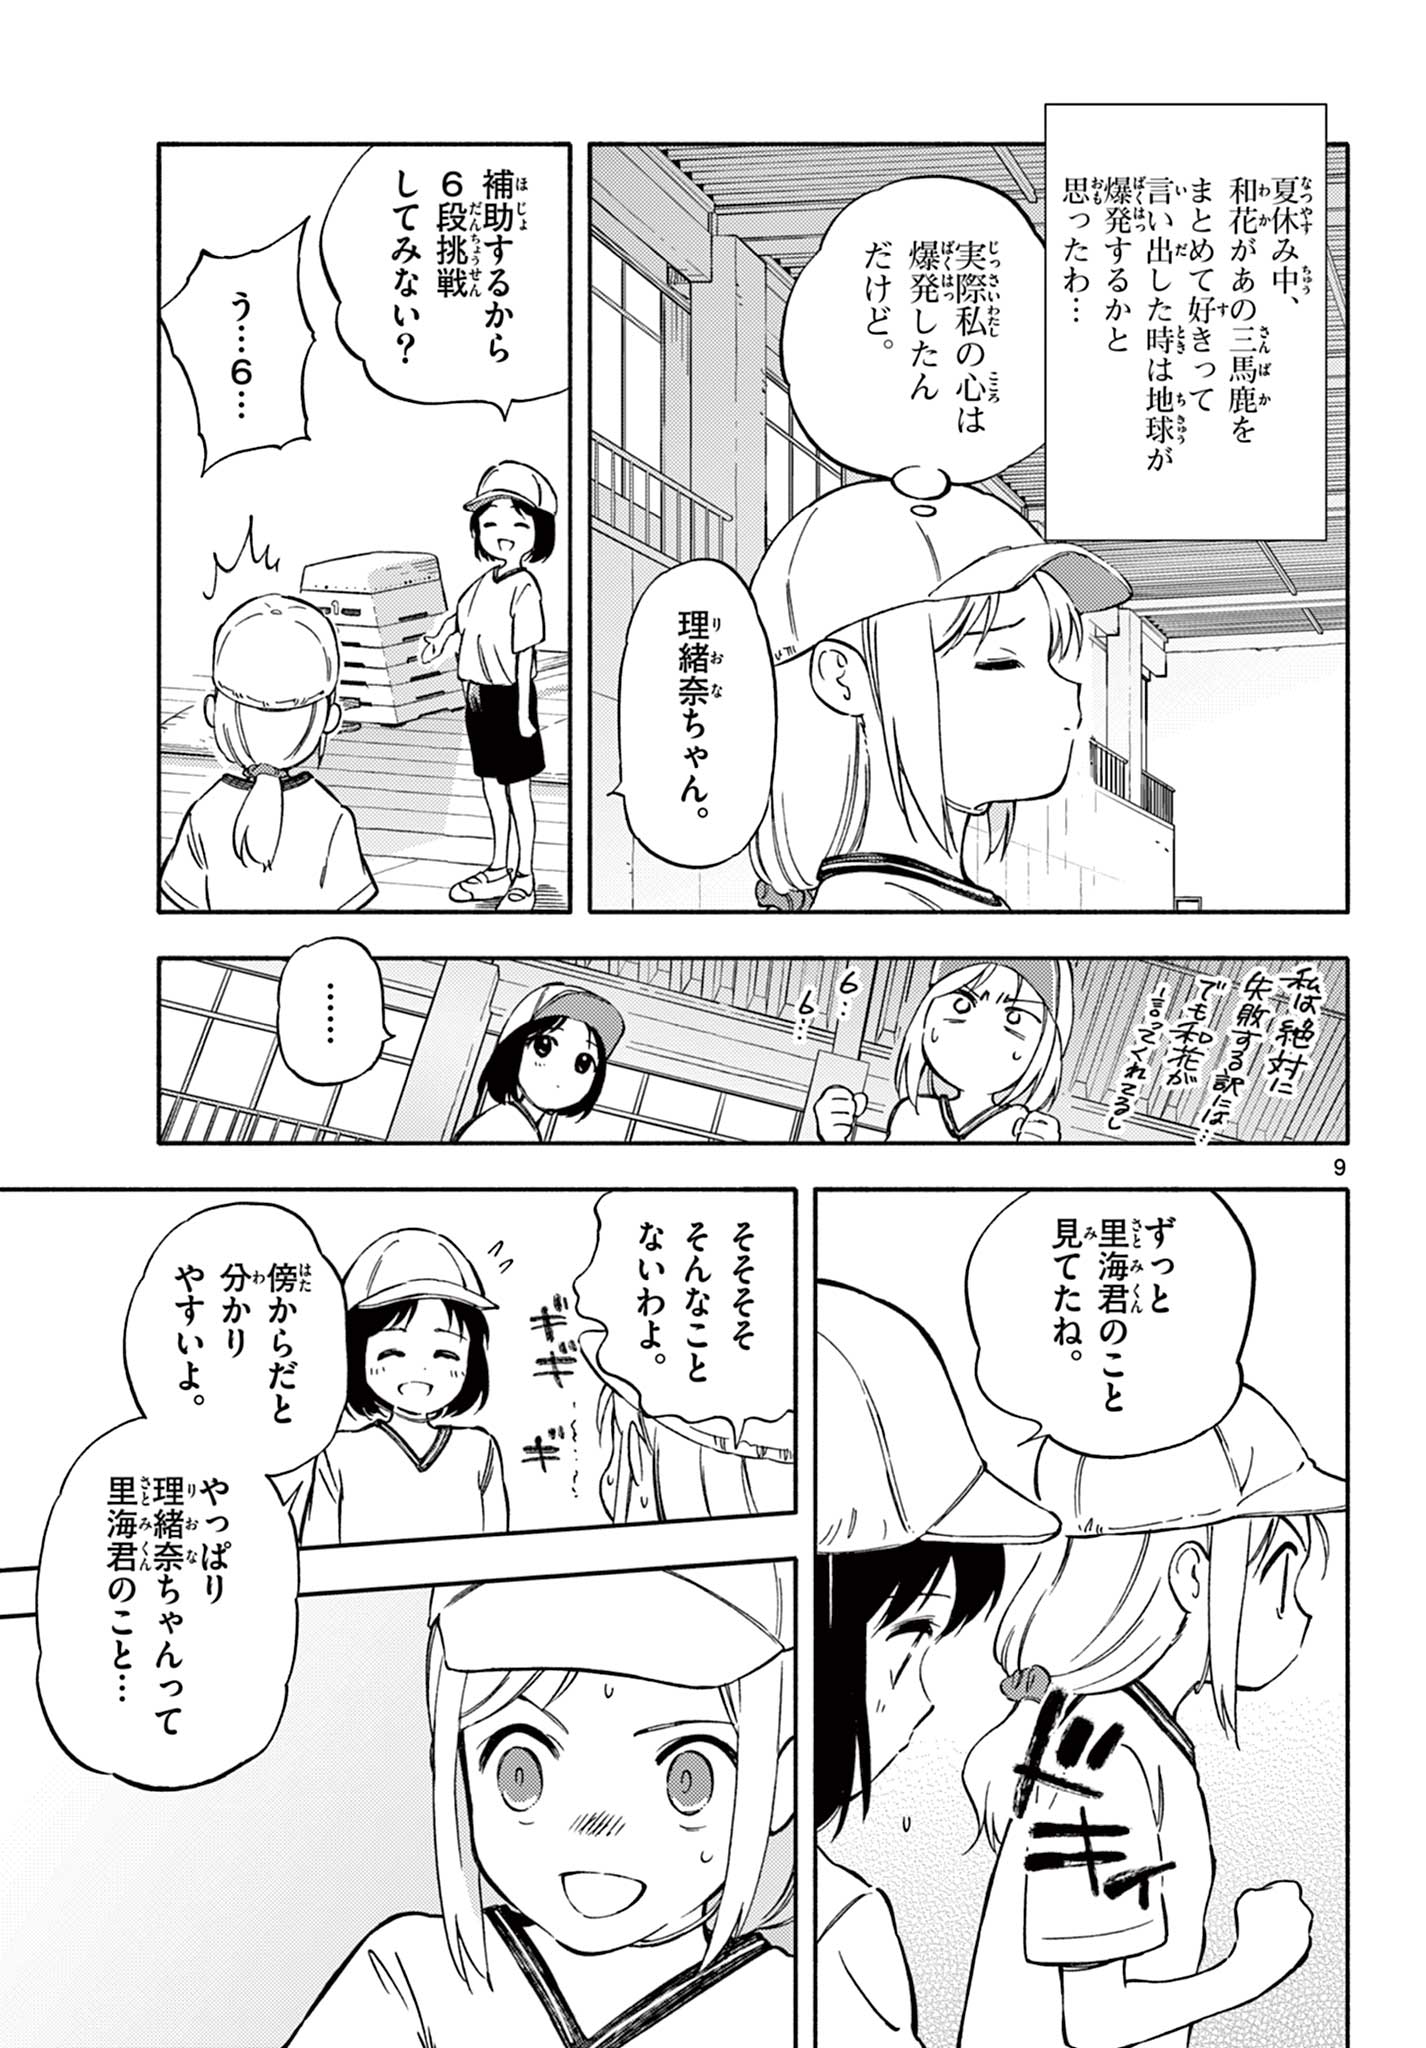 Nami no Shijima no Horizont - Chapter 15.1 - Page 9